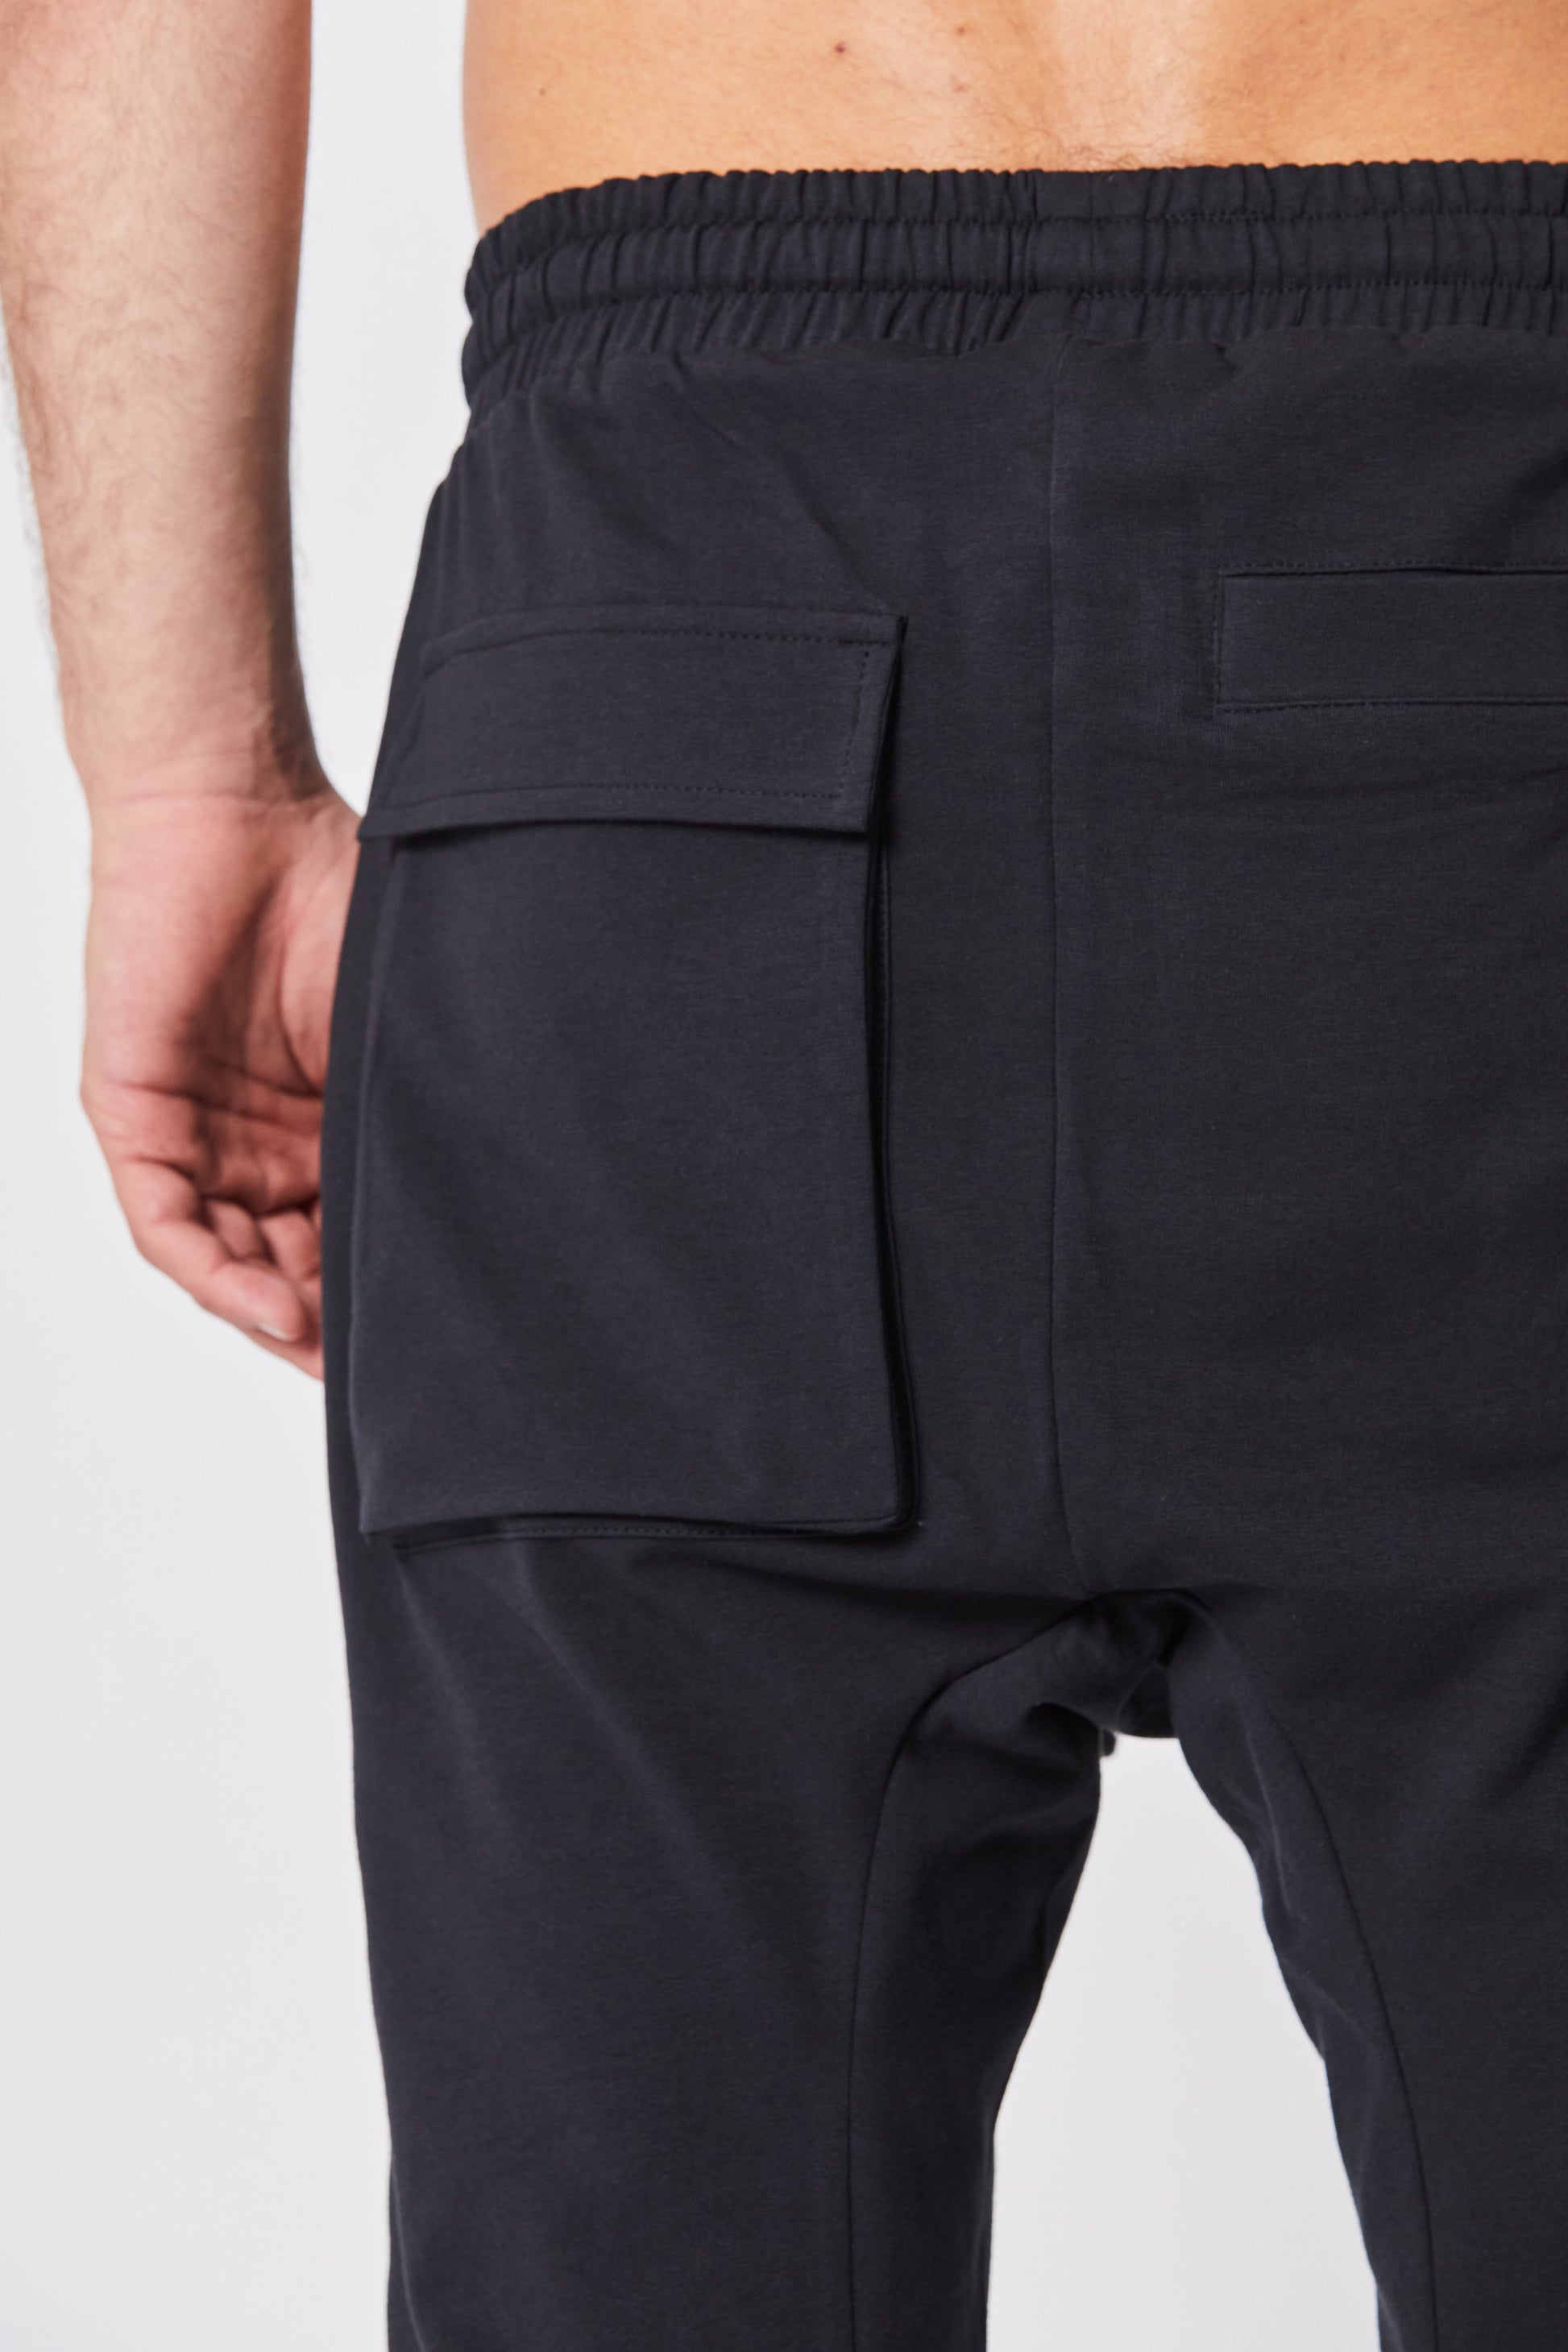 Archive Crotch – Cotton The Modal MST Drop Shorts Stretch 379 Black